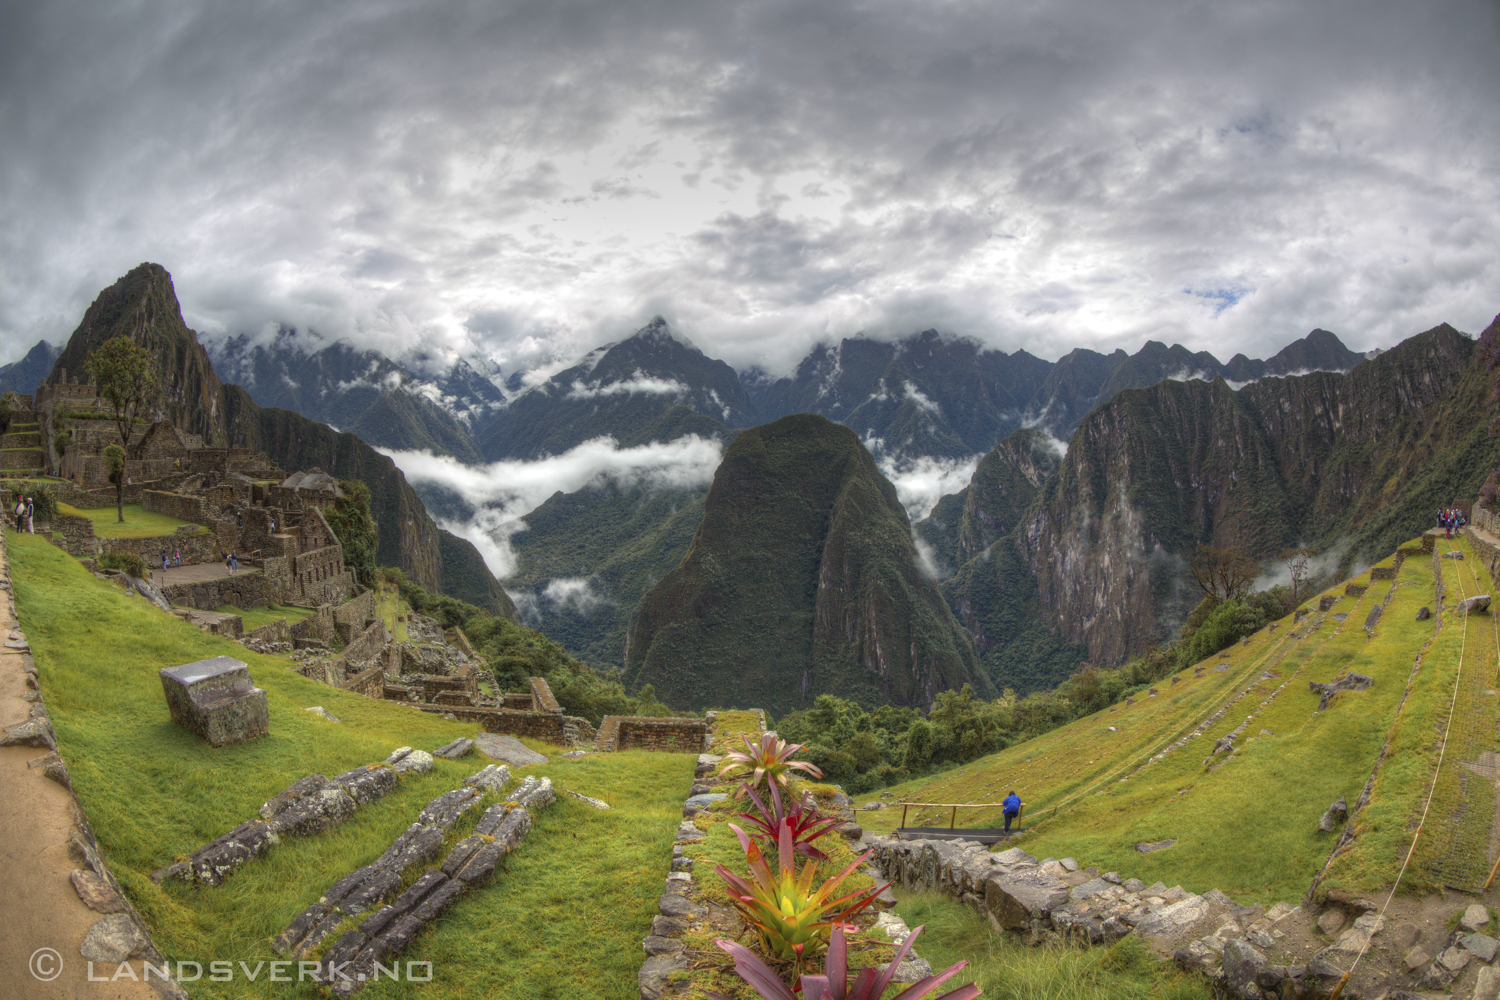 Machu Picchu, Peru. 

(Canon EOS 5D Mark III / Canon EF 8-15mm 
f/4 L USM Fisheye)